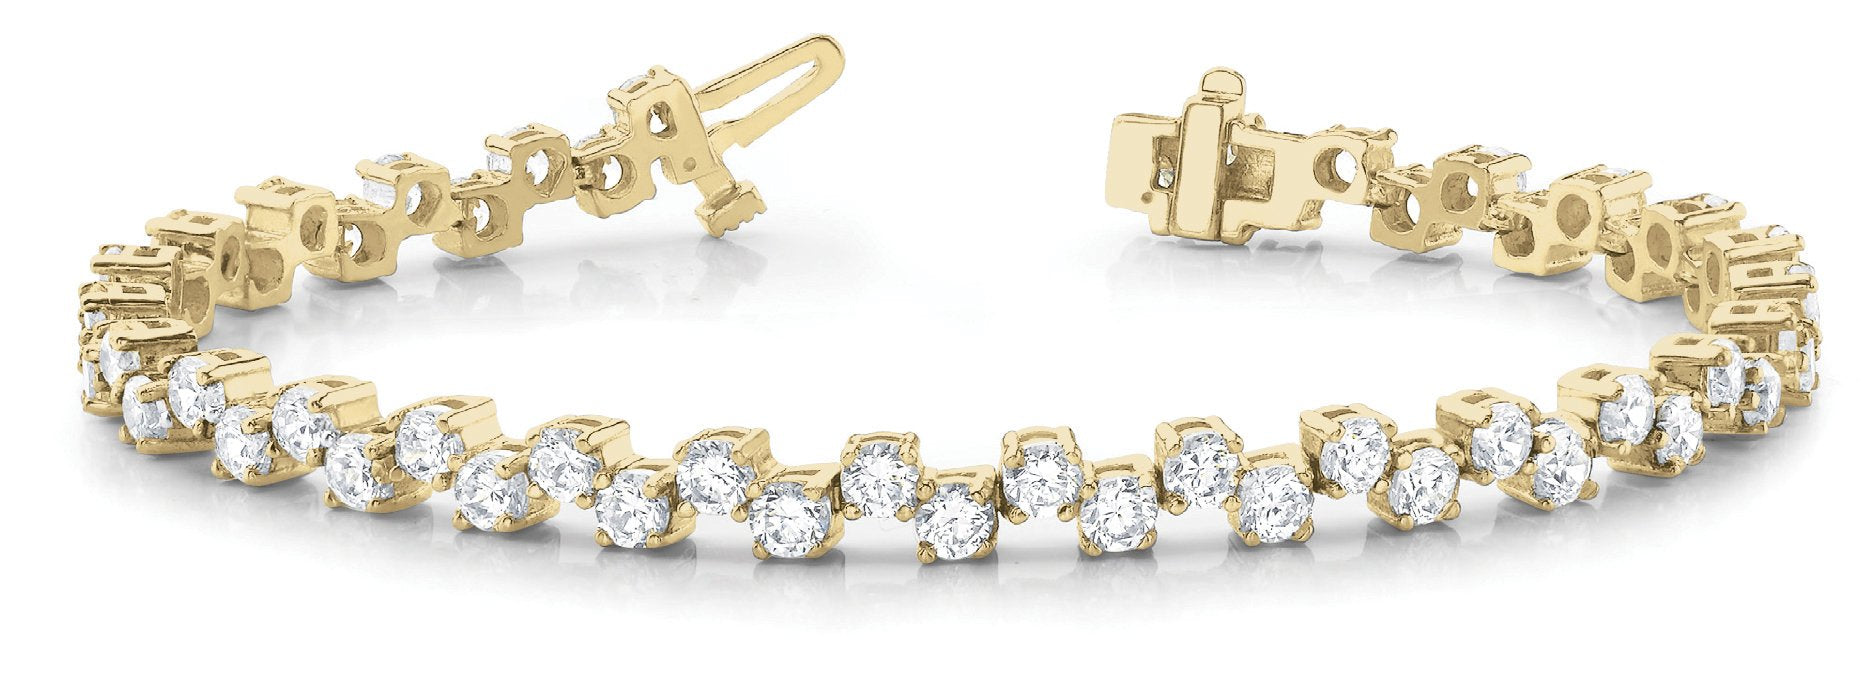 Fancy Diamond Bracelet Ladies 6.89ct tw - 14kt Gold